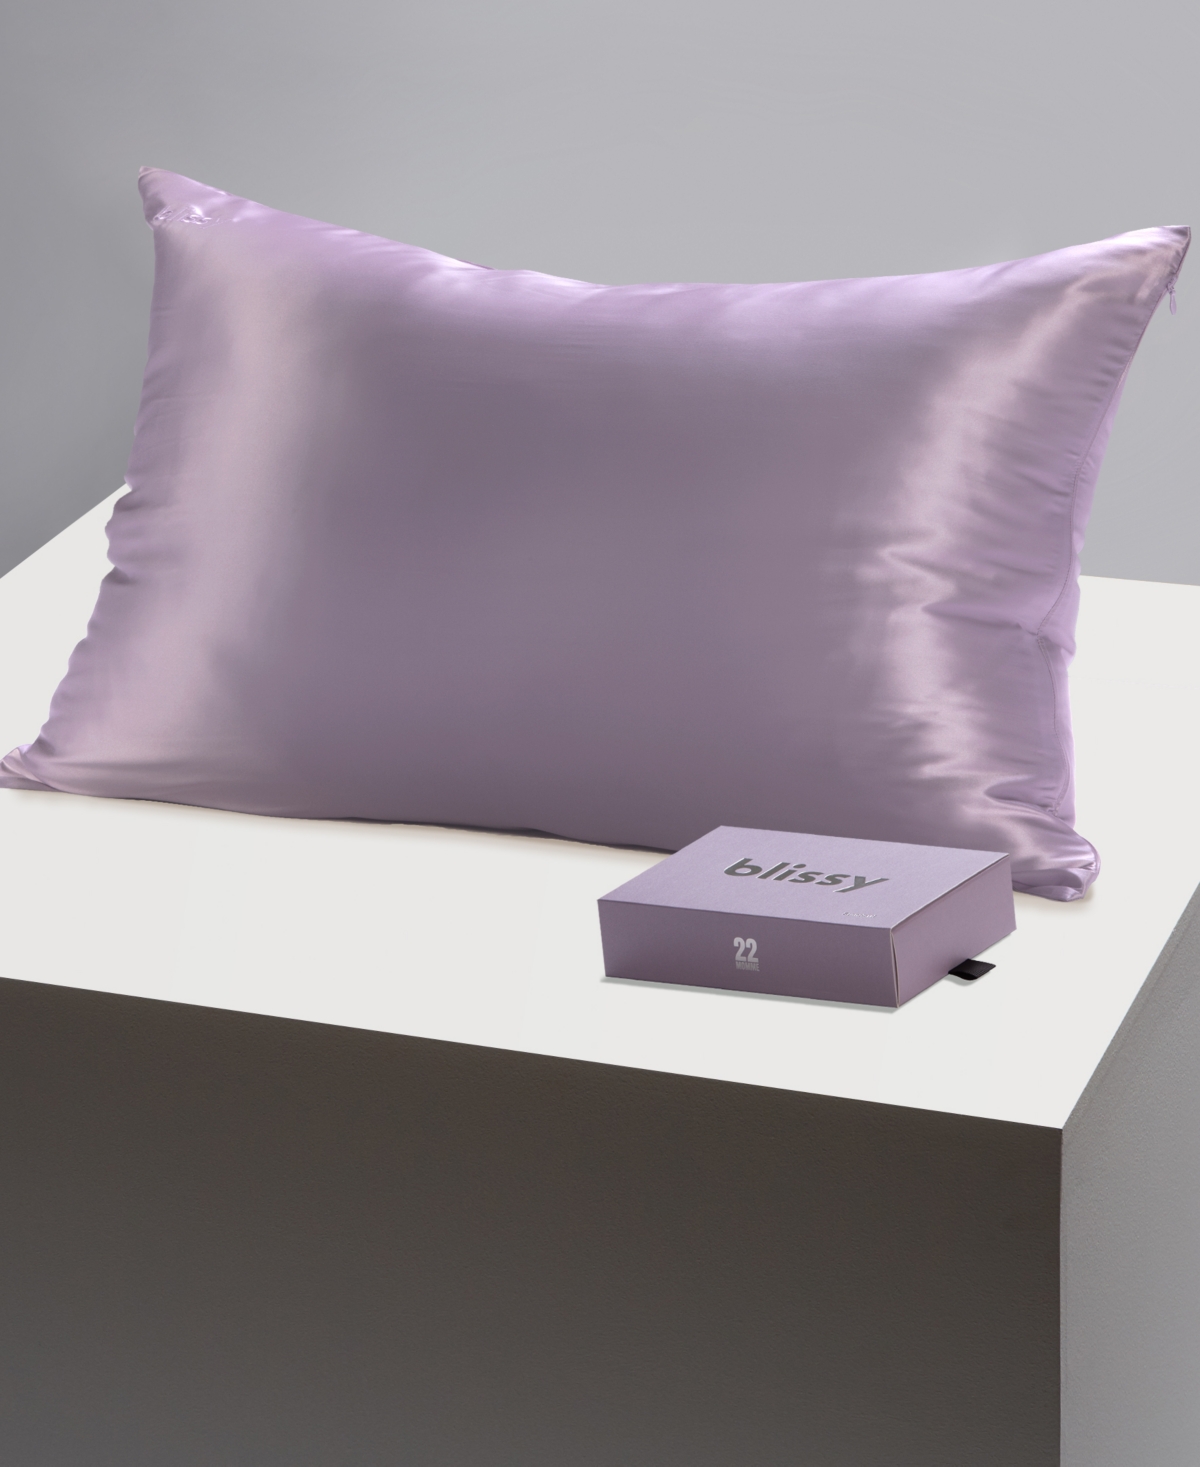 Blissy 22-momme Silk Pillowcase, Queen In Lavender